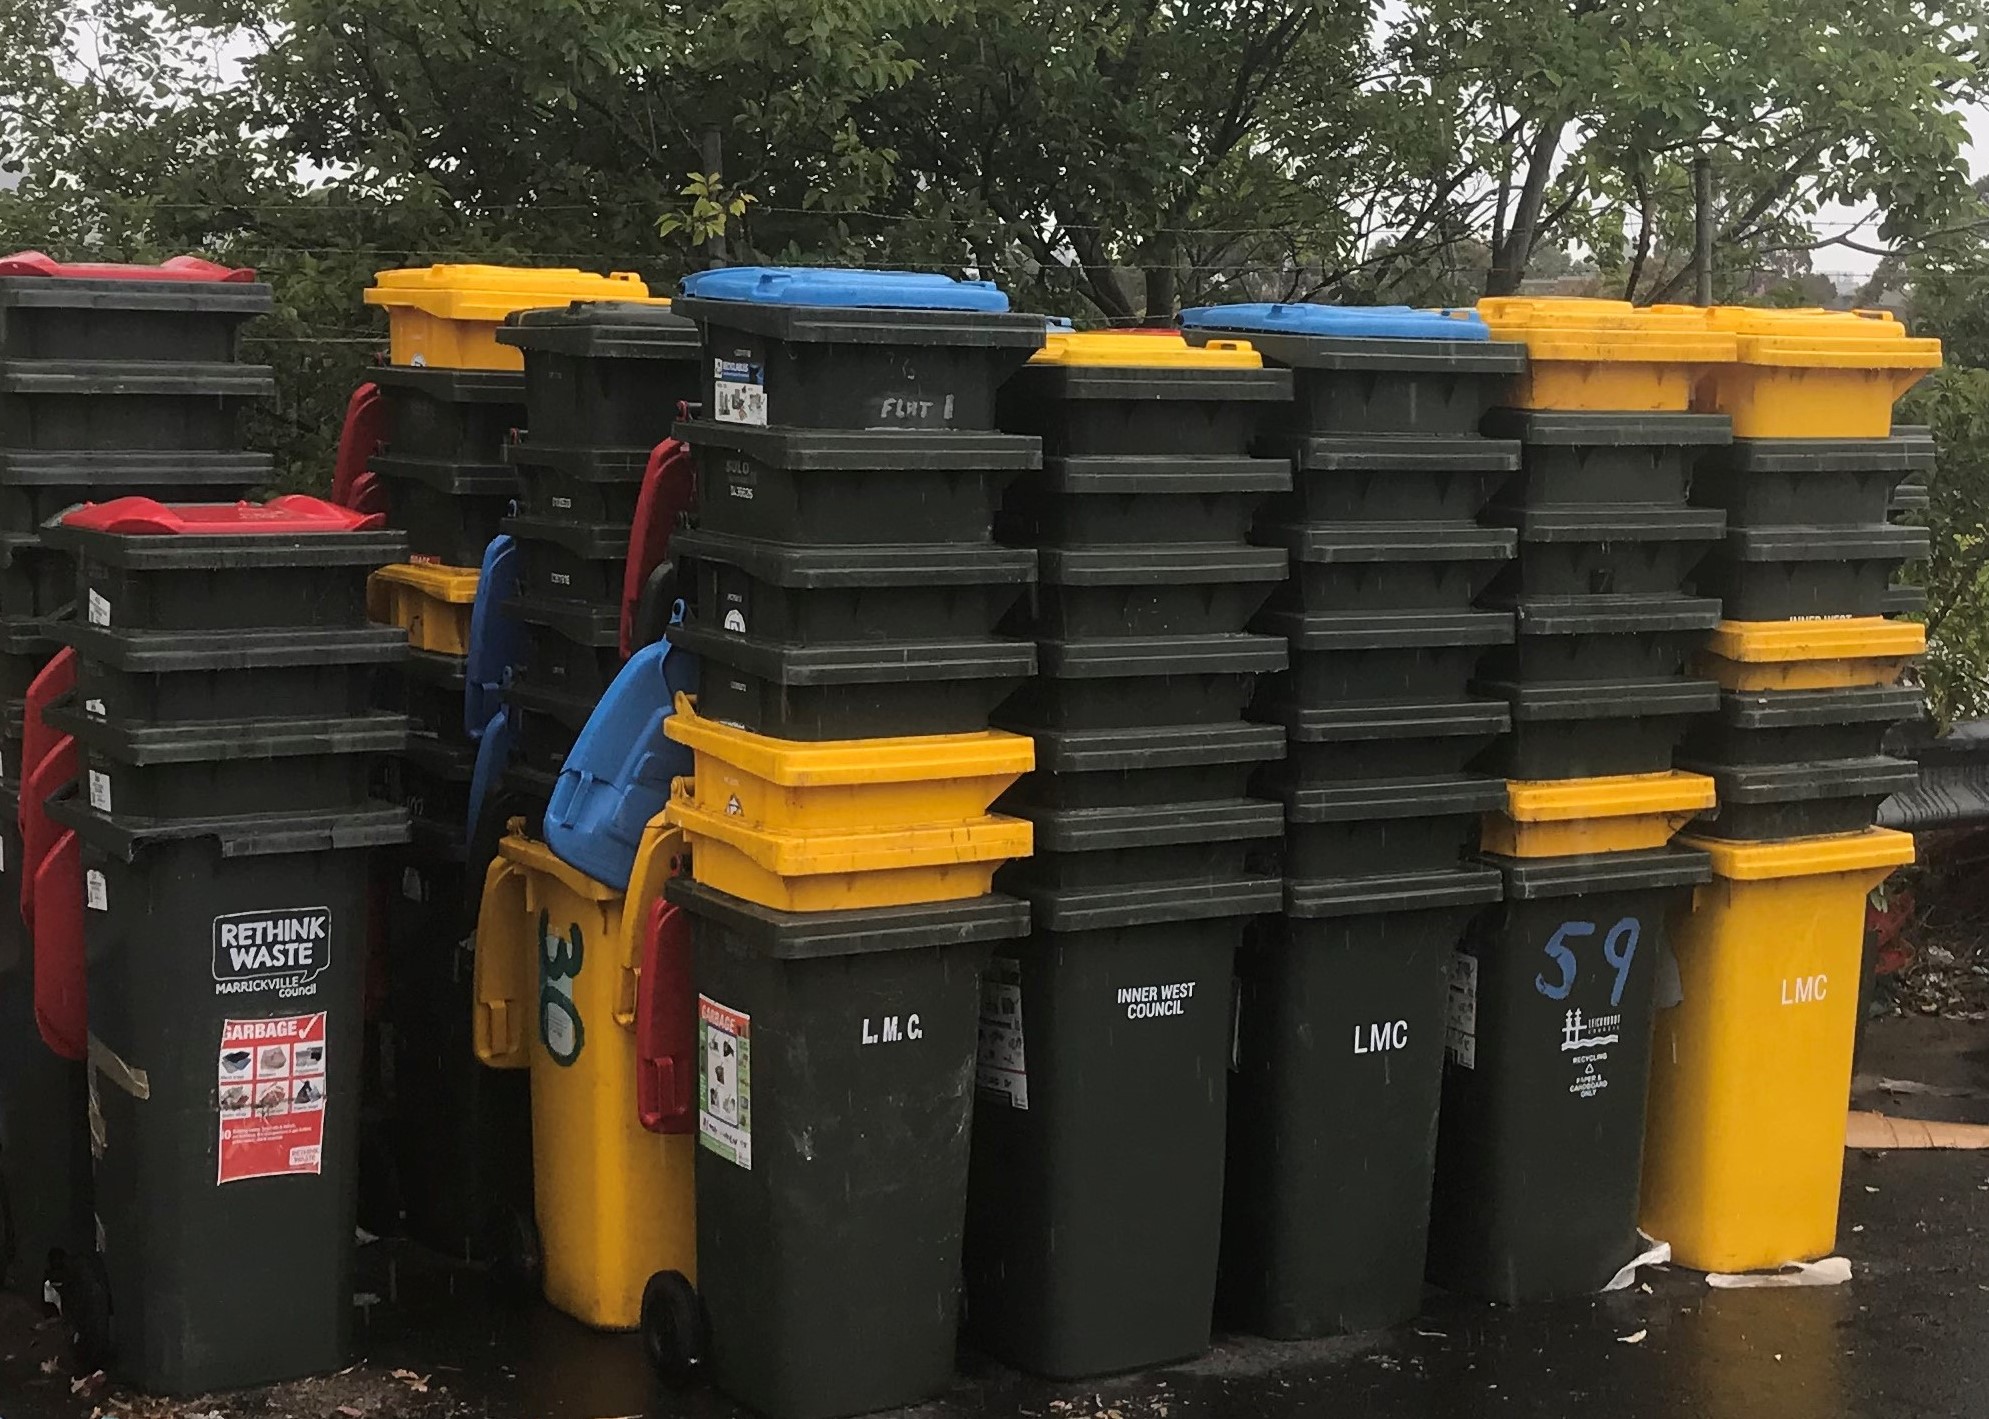 Broken bins ready for recycling